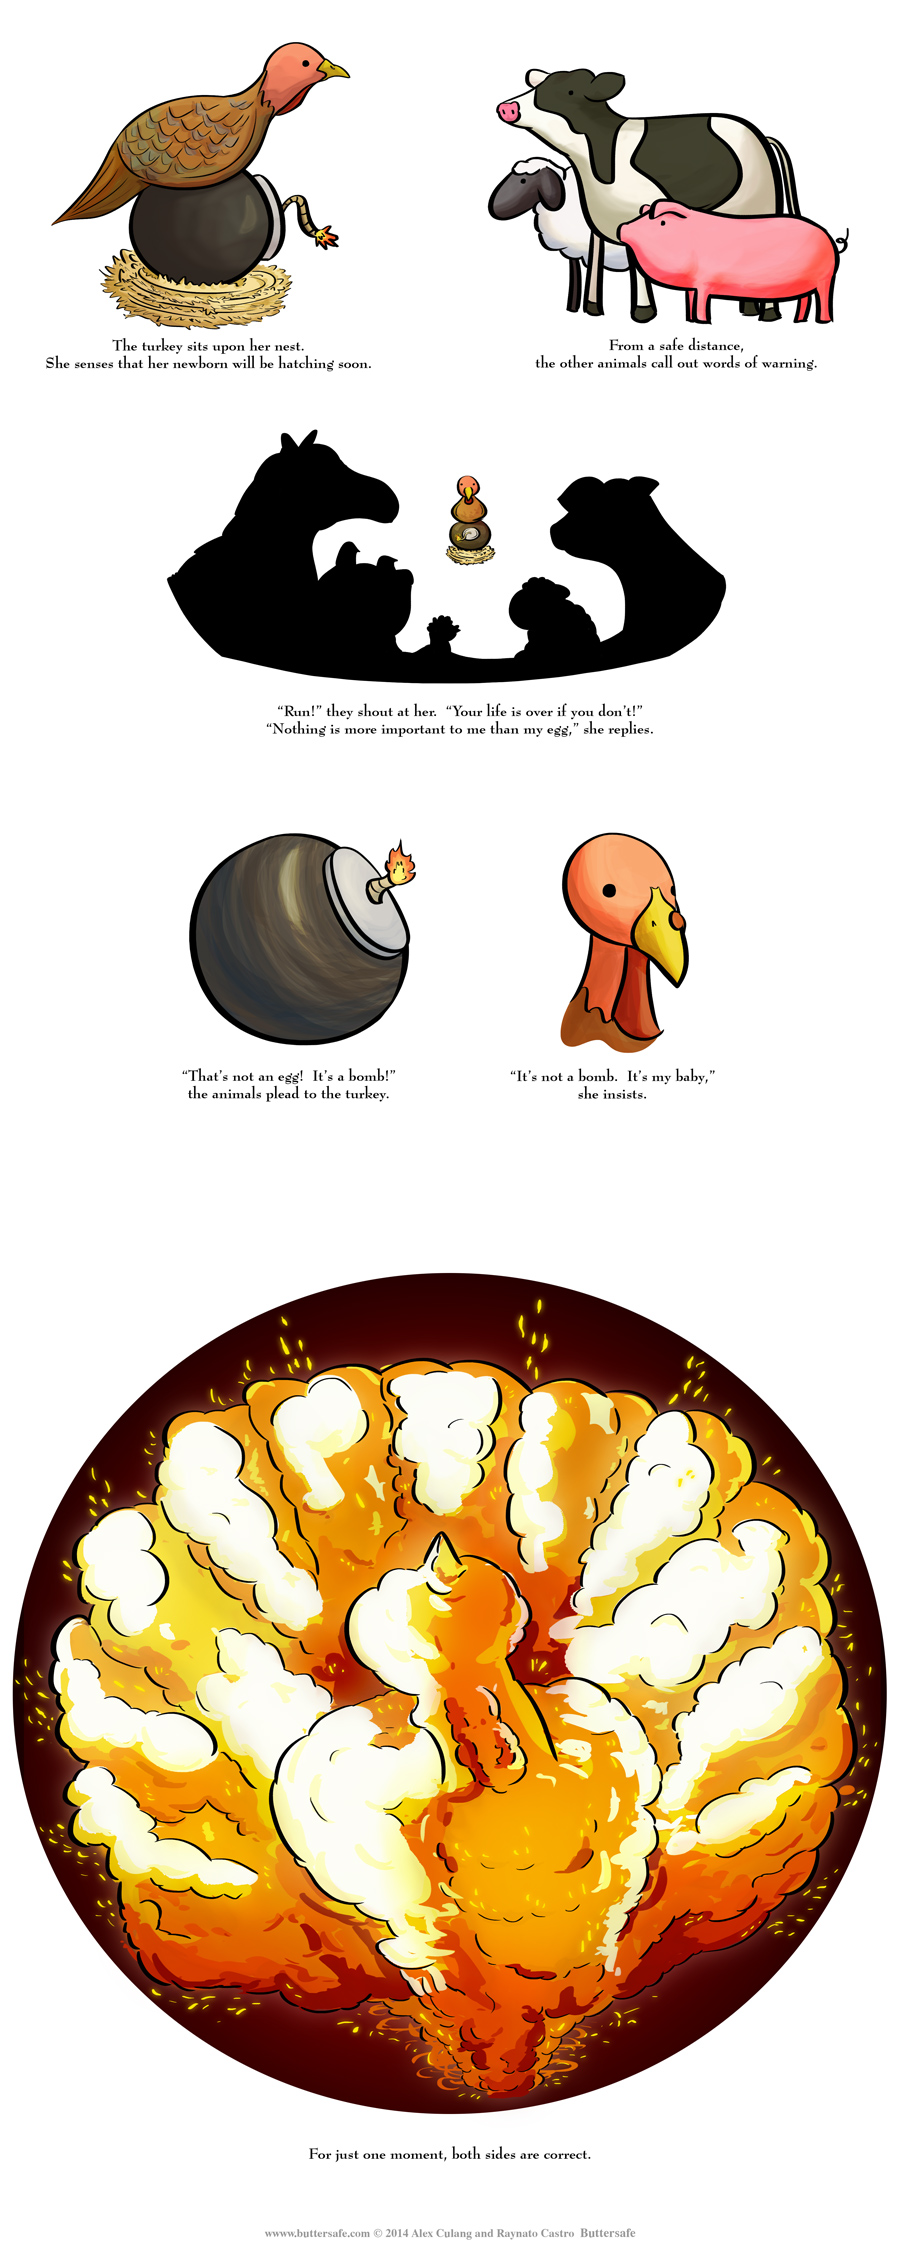 The Turkey Egg